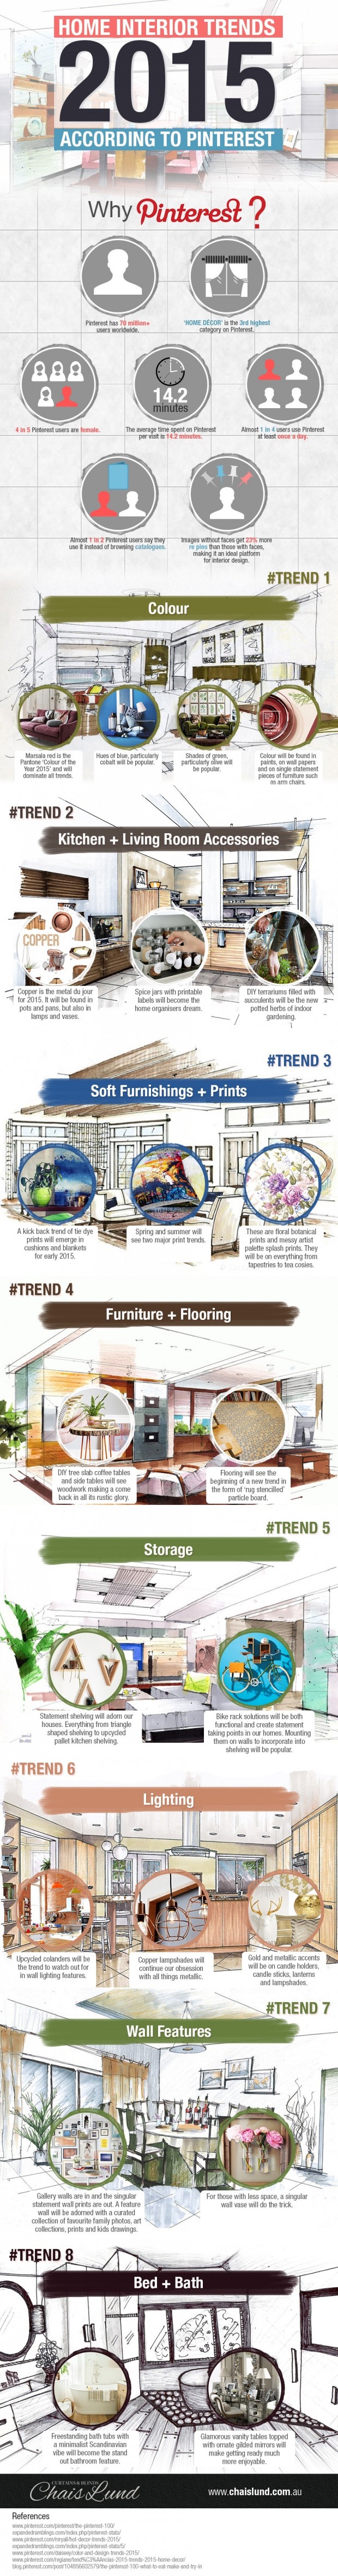 home interior trends 2015